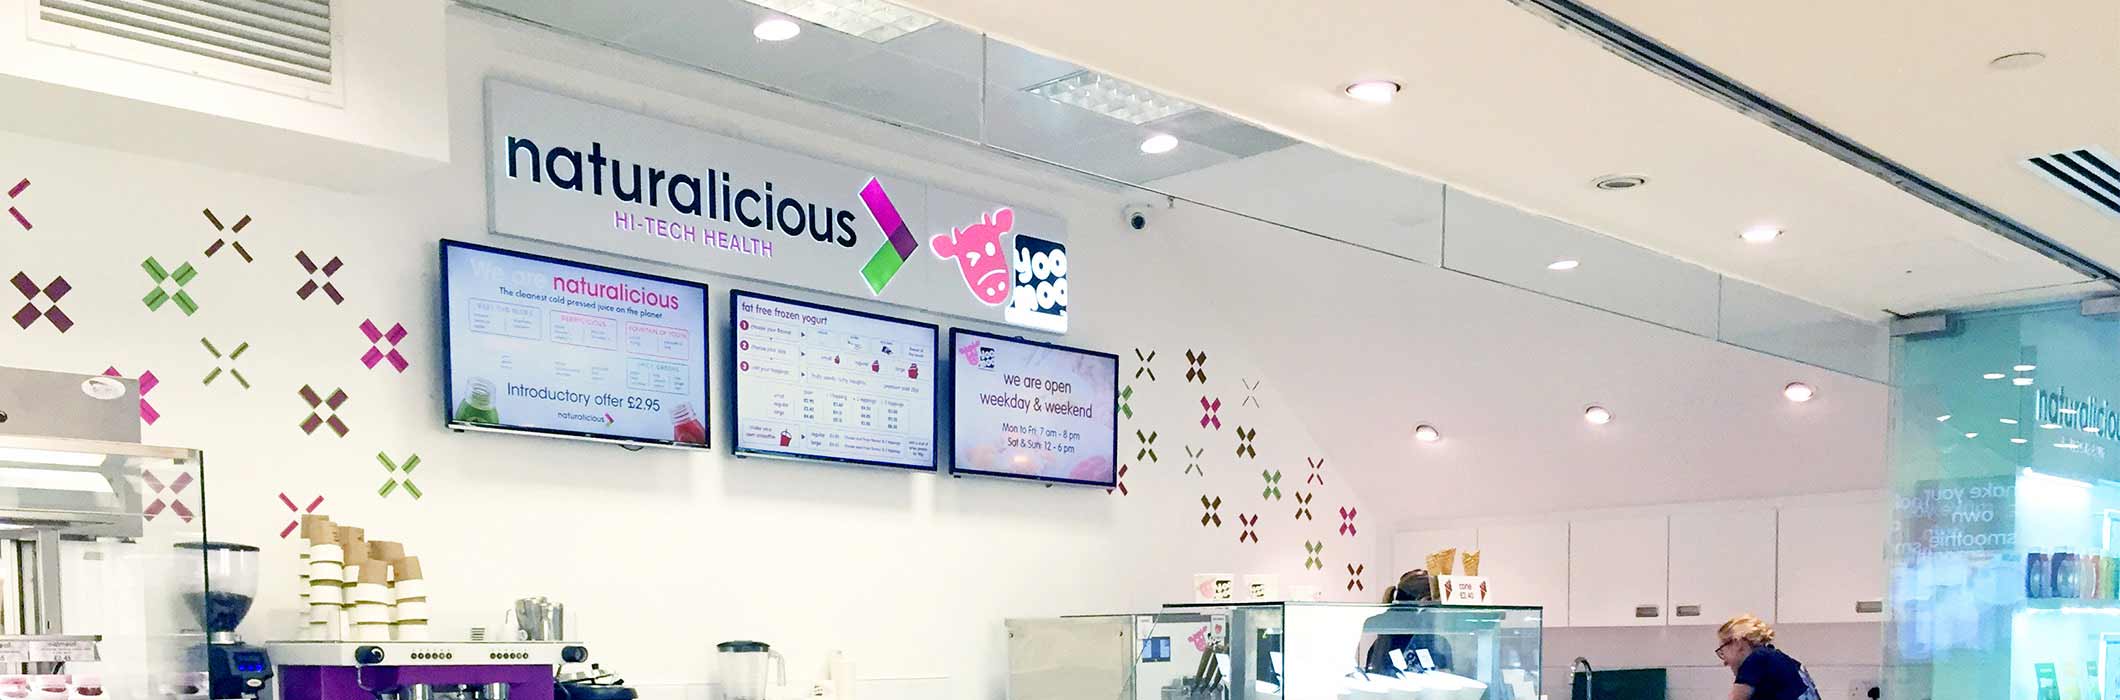 Menu board digital signage screens at Naturalicious Hi-Tech health by Yoo Moo, a restaurant in Canary Wharf London